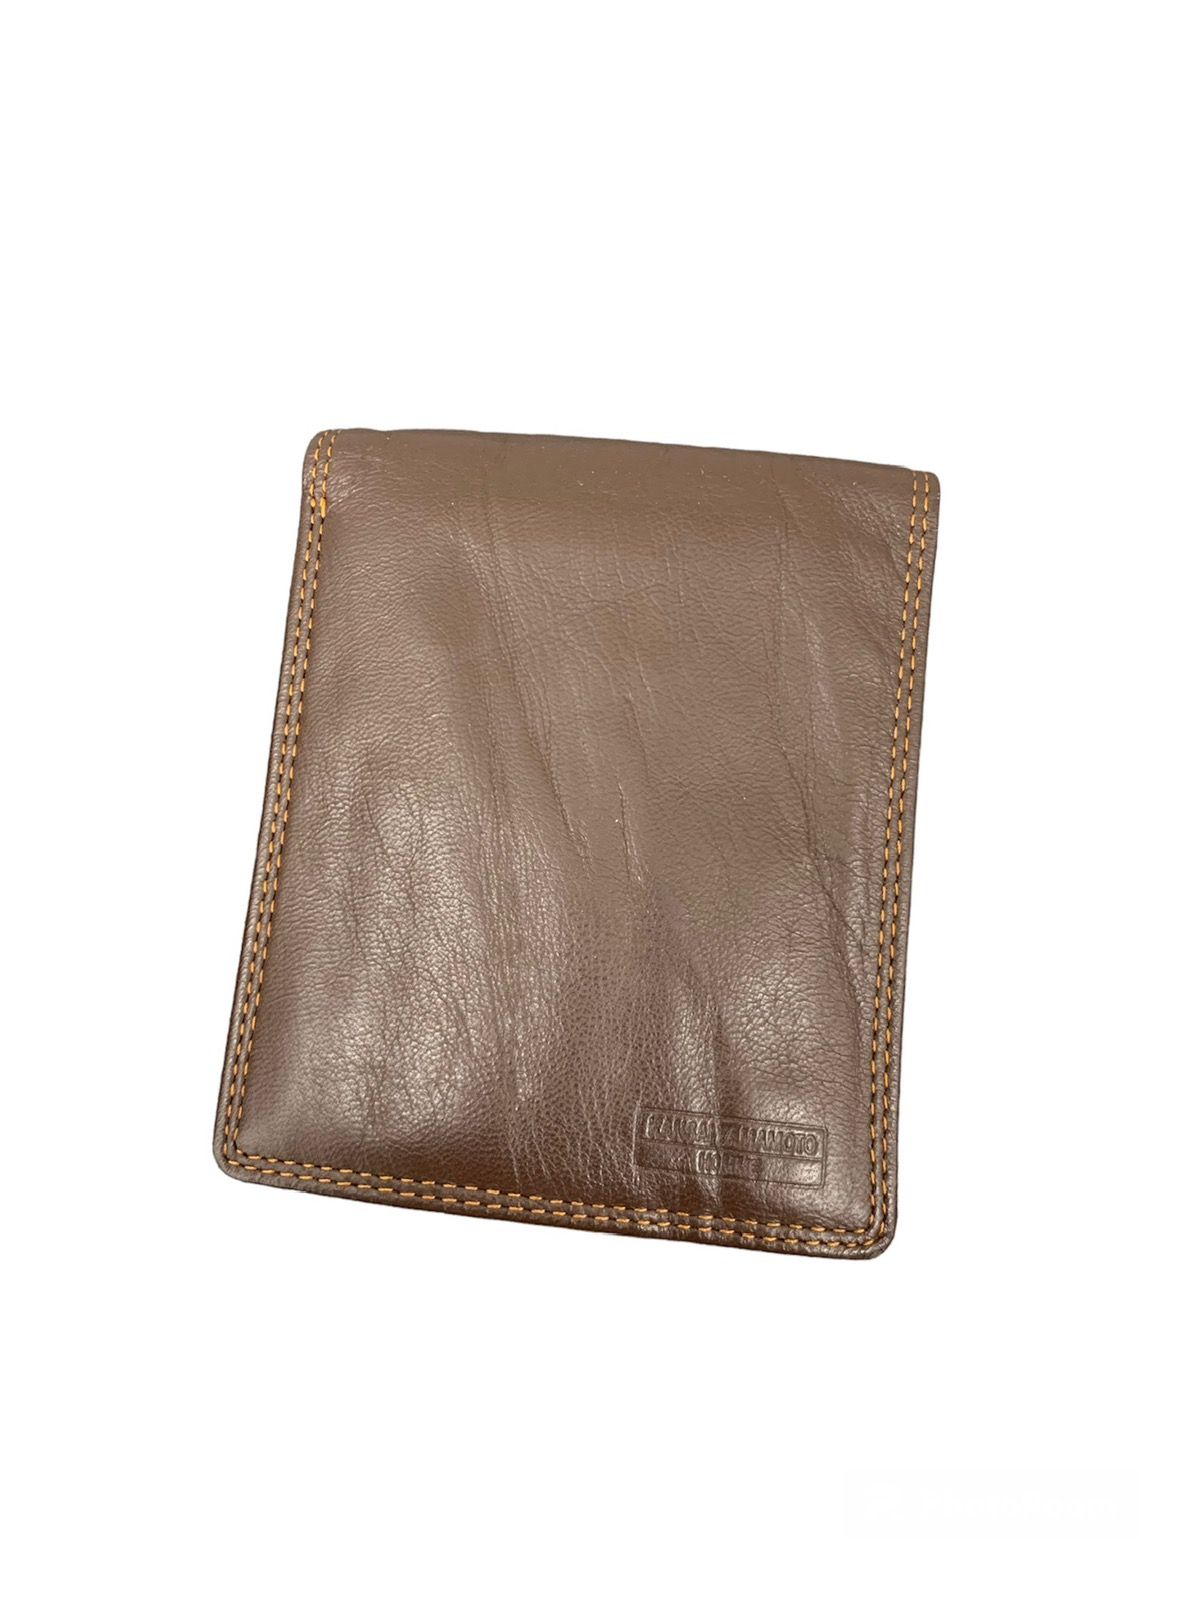 JapaneseBrand Kansai Yamamoto Leather Wallet - 1